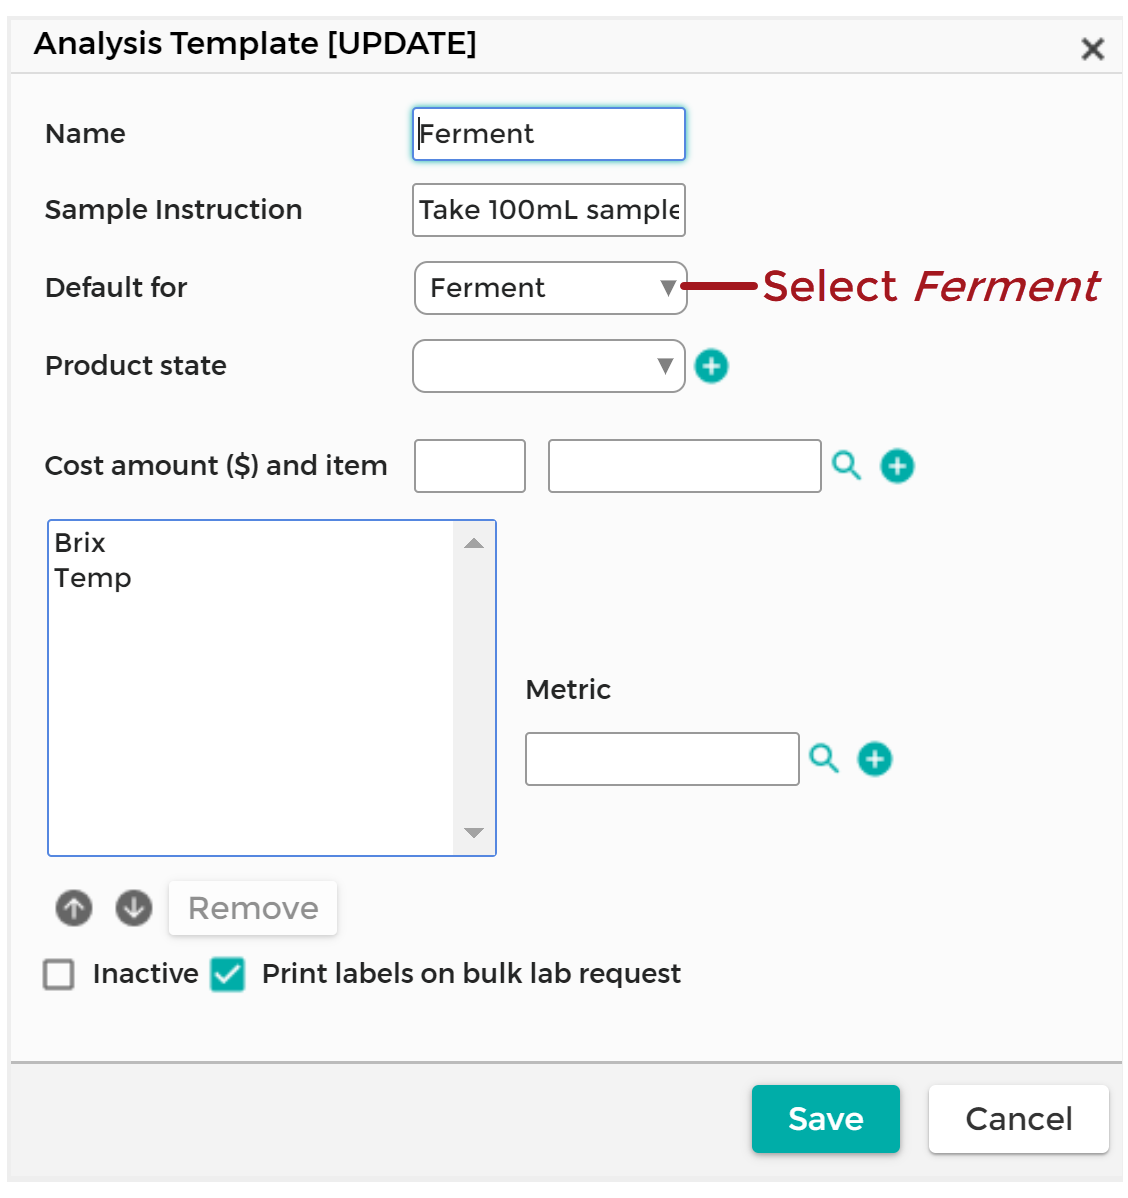 Analysis_Template_Update_-_Ferment_-_Default_For_Ferment_20200731.png